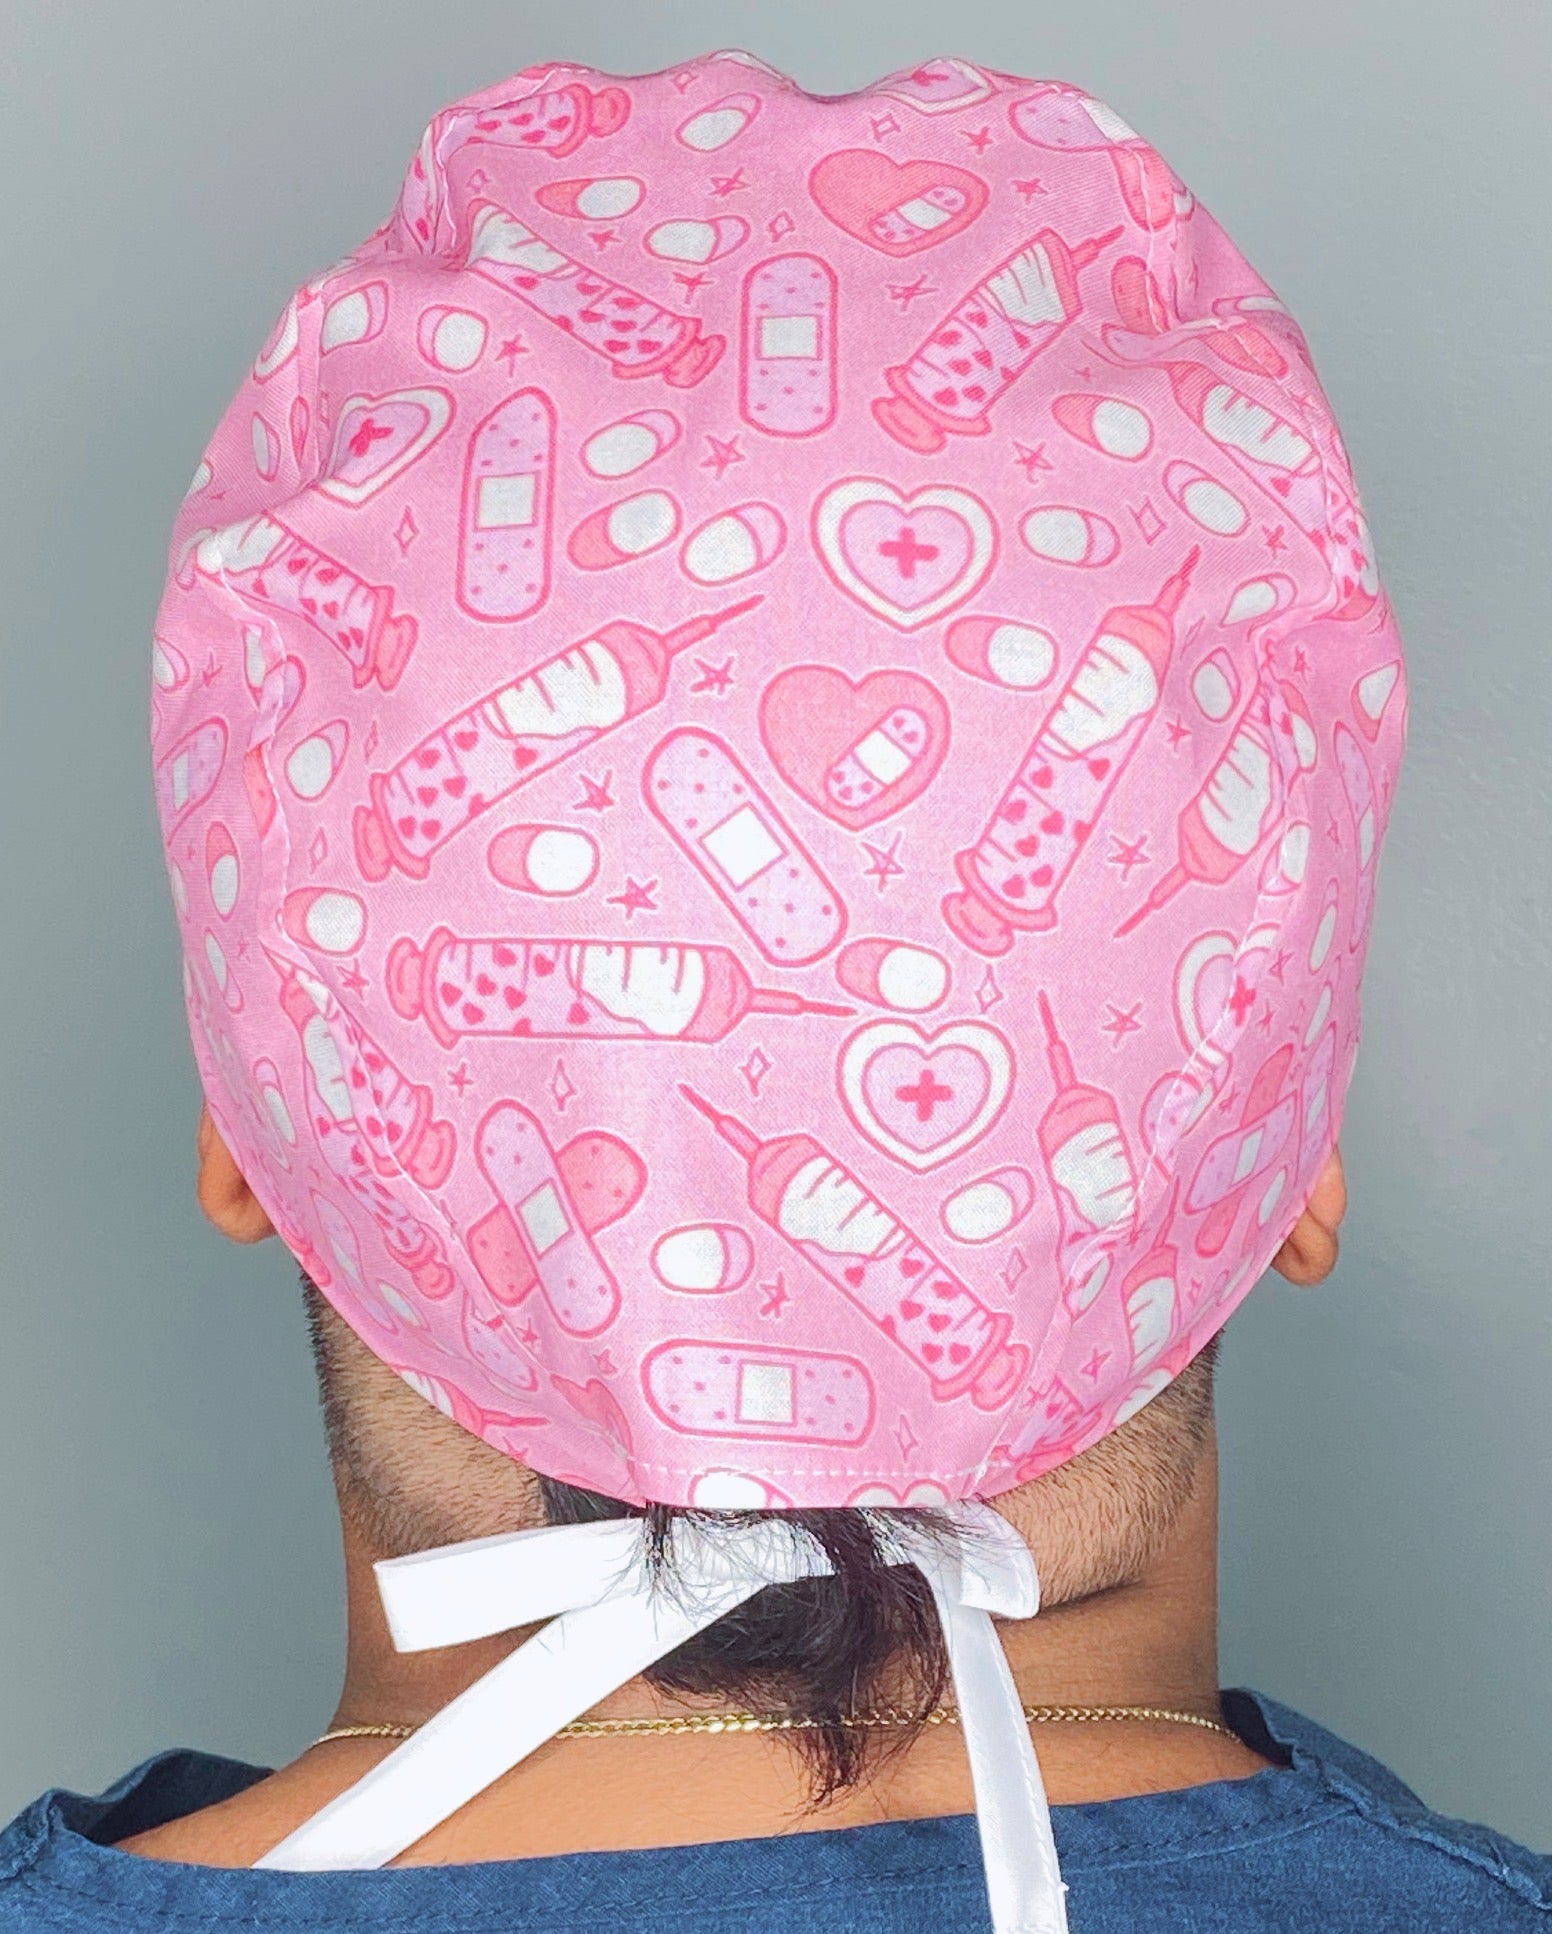 Bright Pink Band-Aids, Needles & Hearts Unisex Medical Theme Scrub Cap